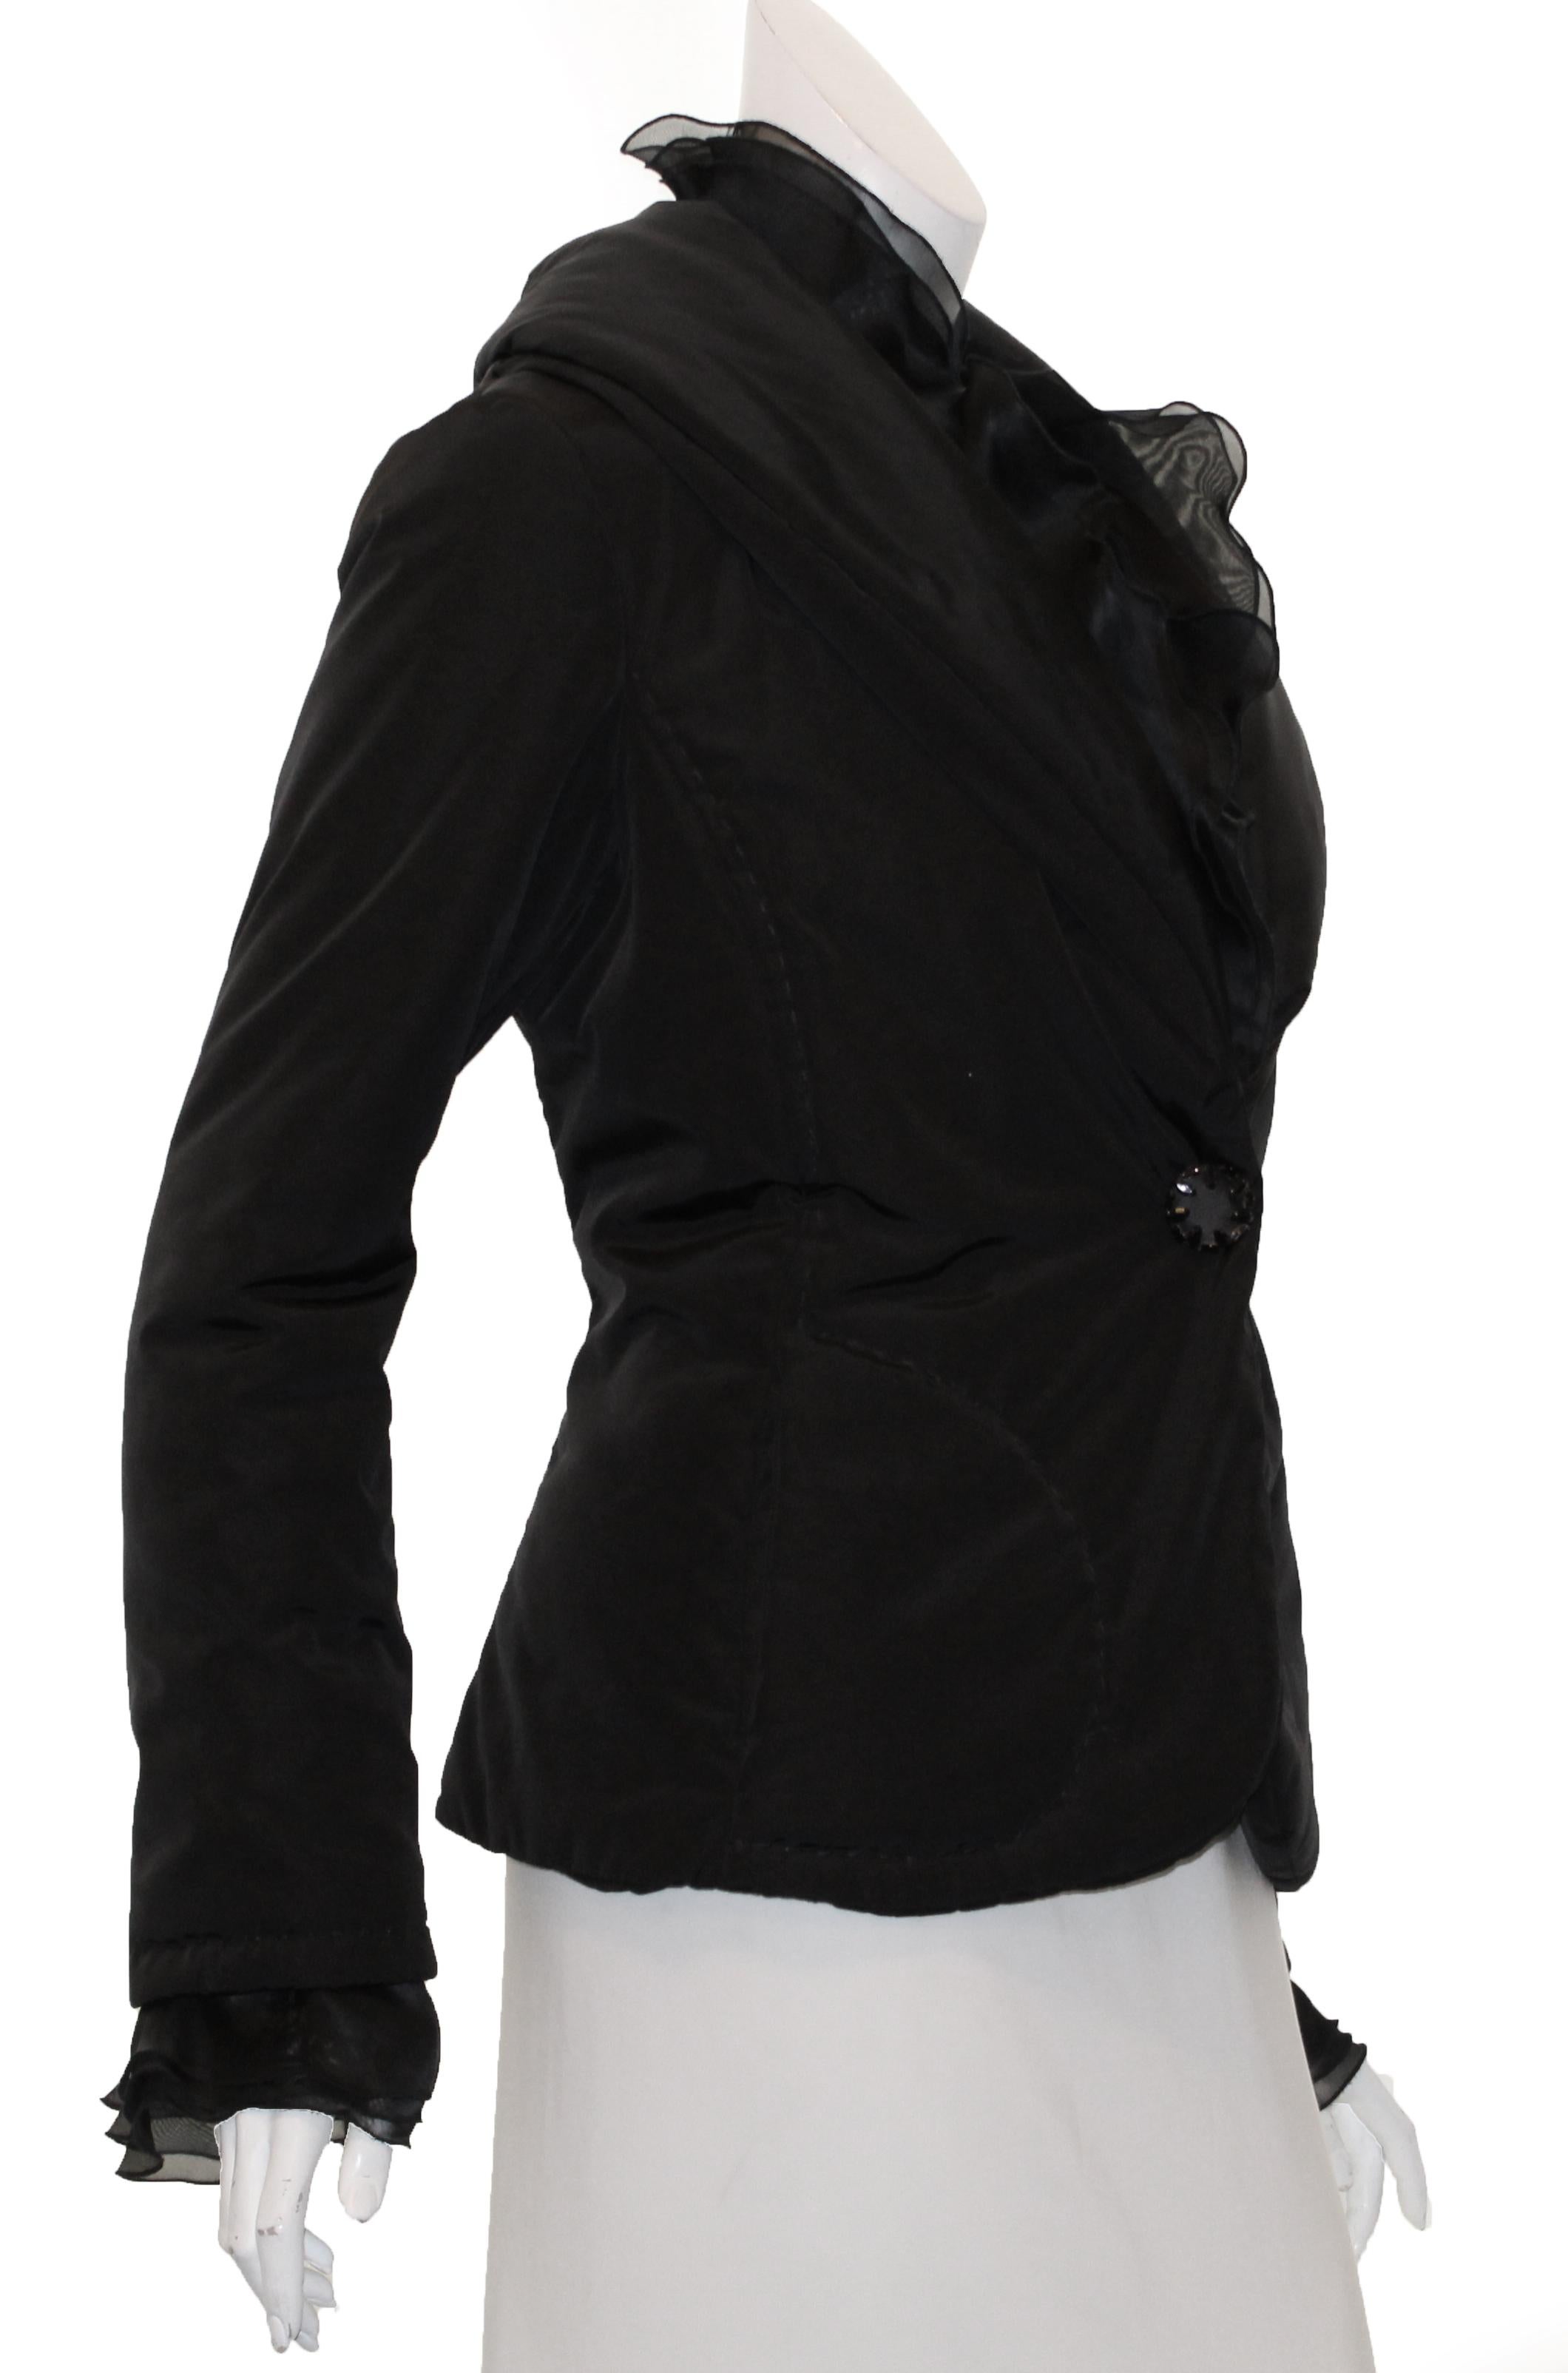 Women's Valentino Black Puffer Jacket with Ruffle Collar & Cuffs